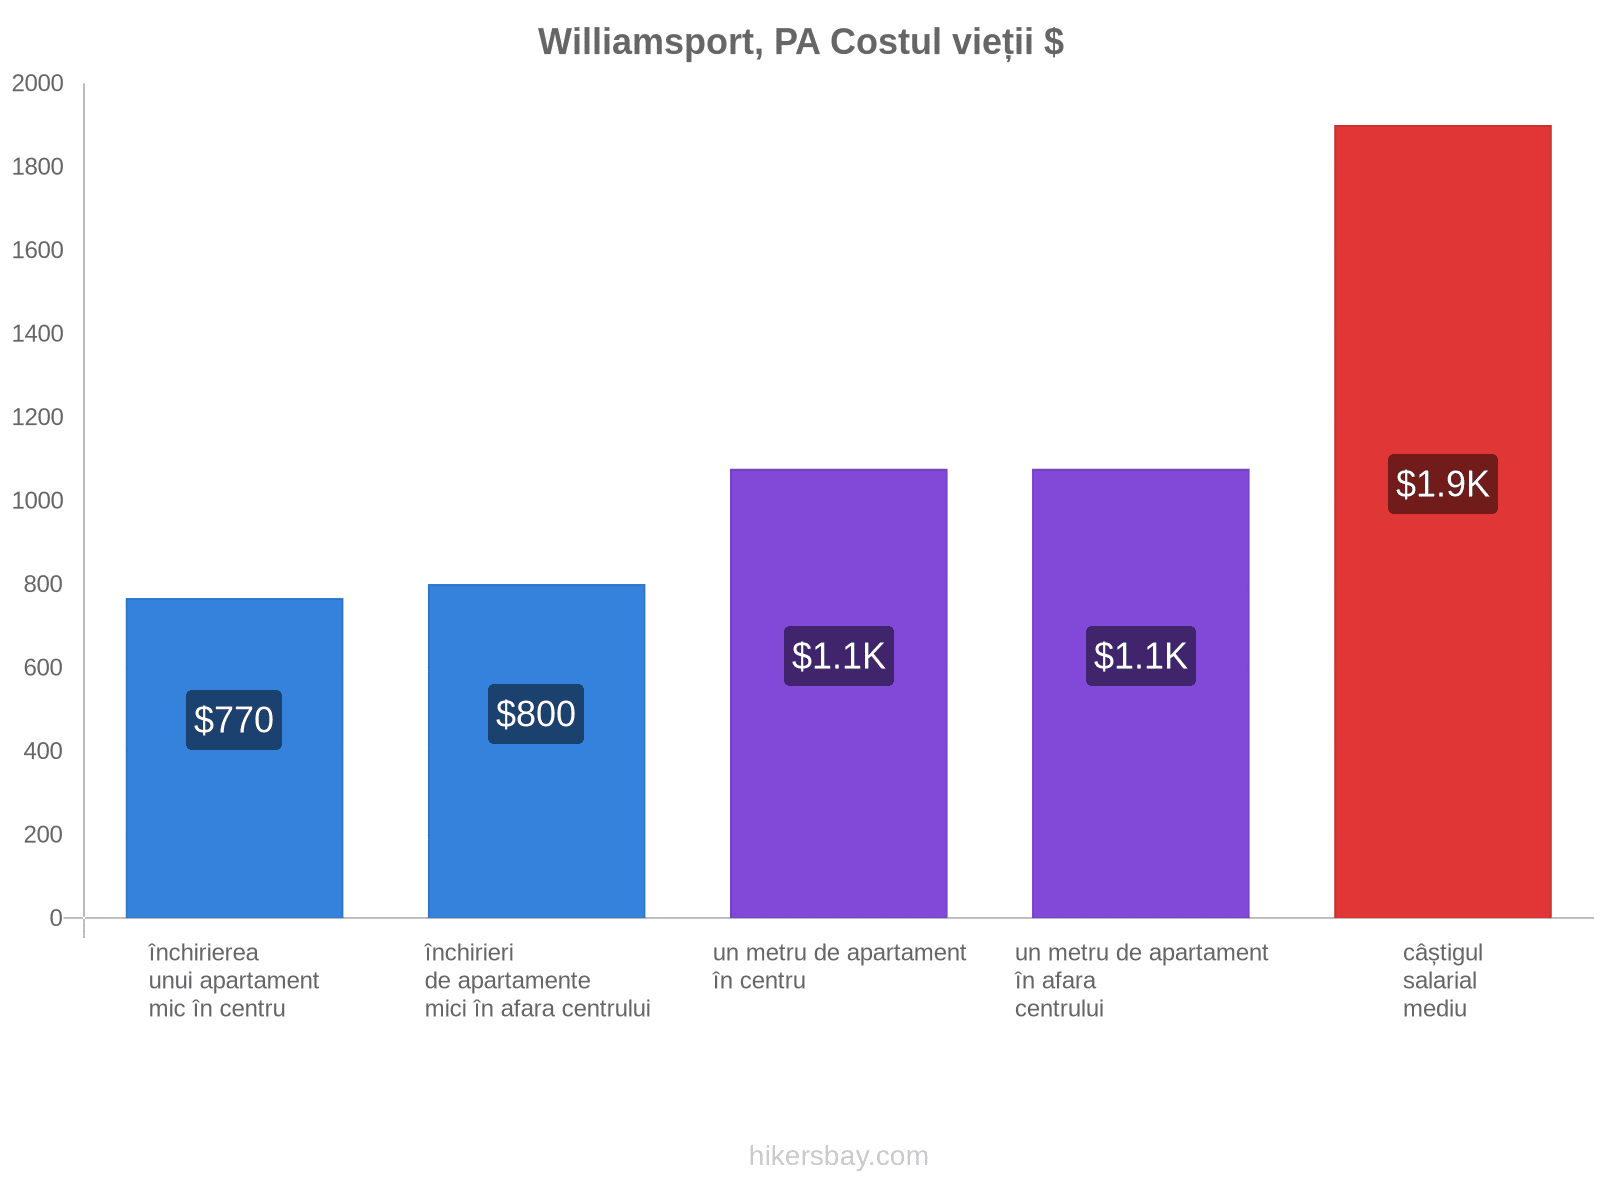 Williamsport, PA costul vieții hikersbay.com